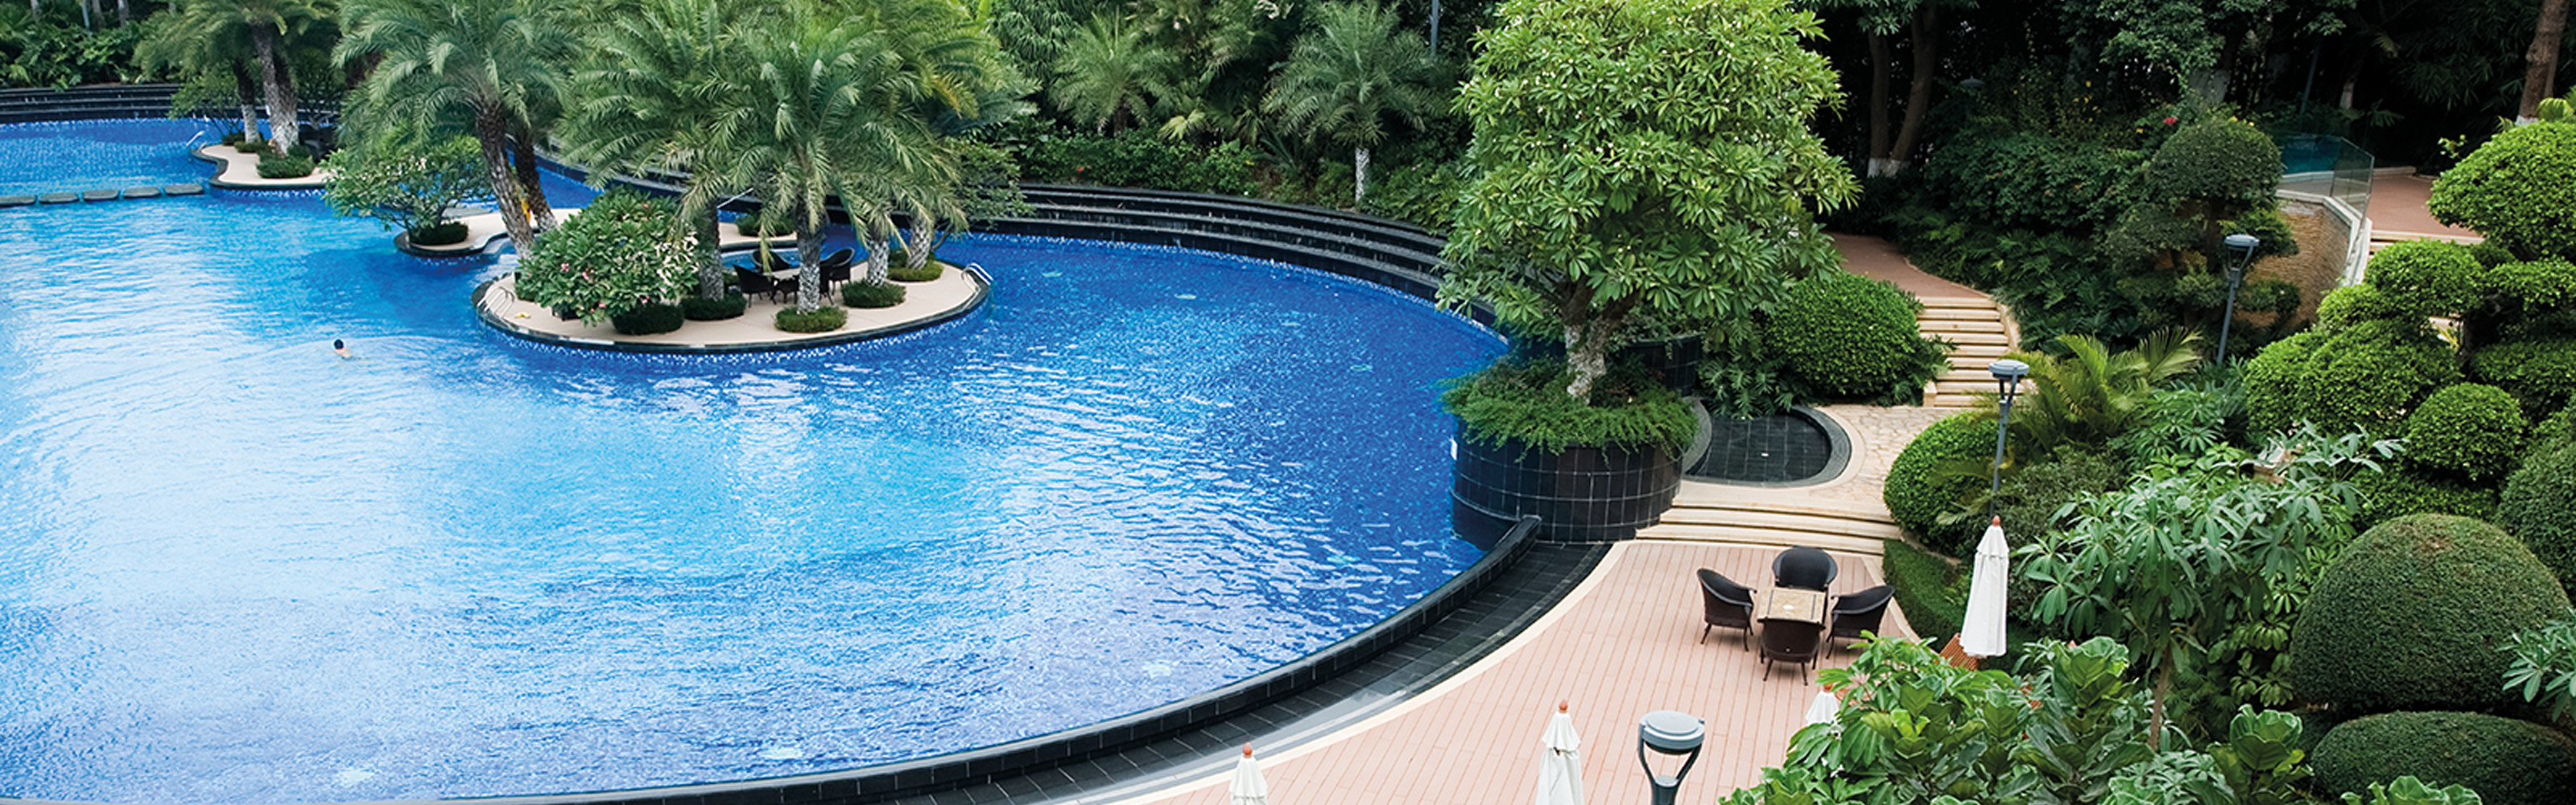 hotel-garden-&-pool-shutterstock_91946972.jpg